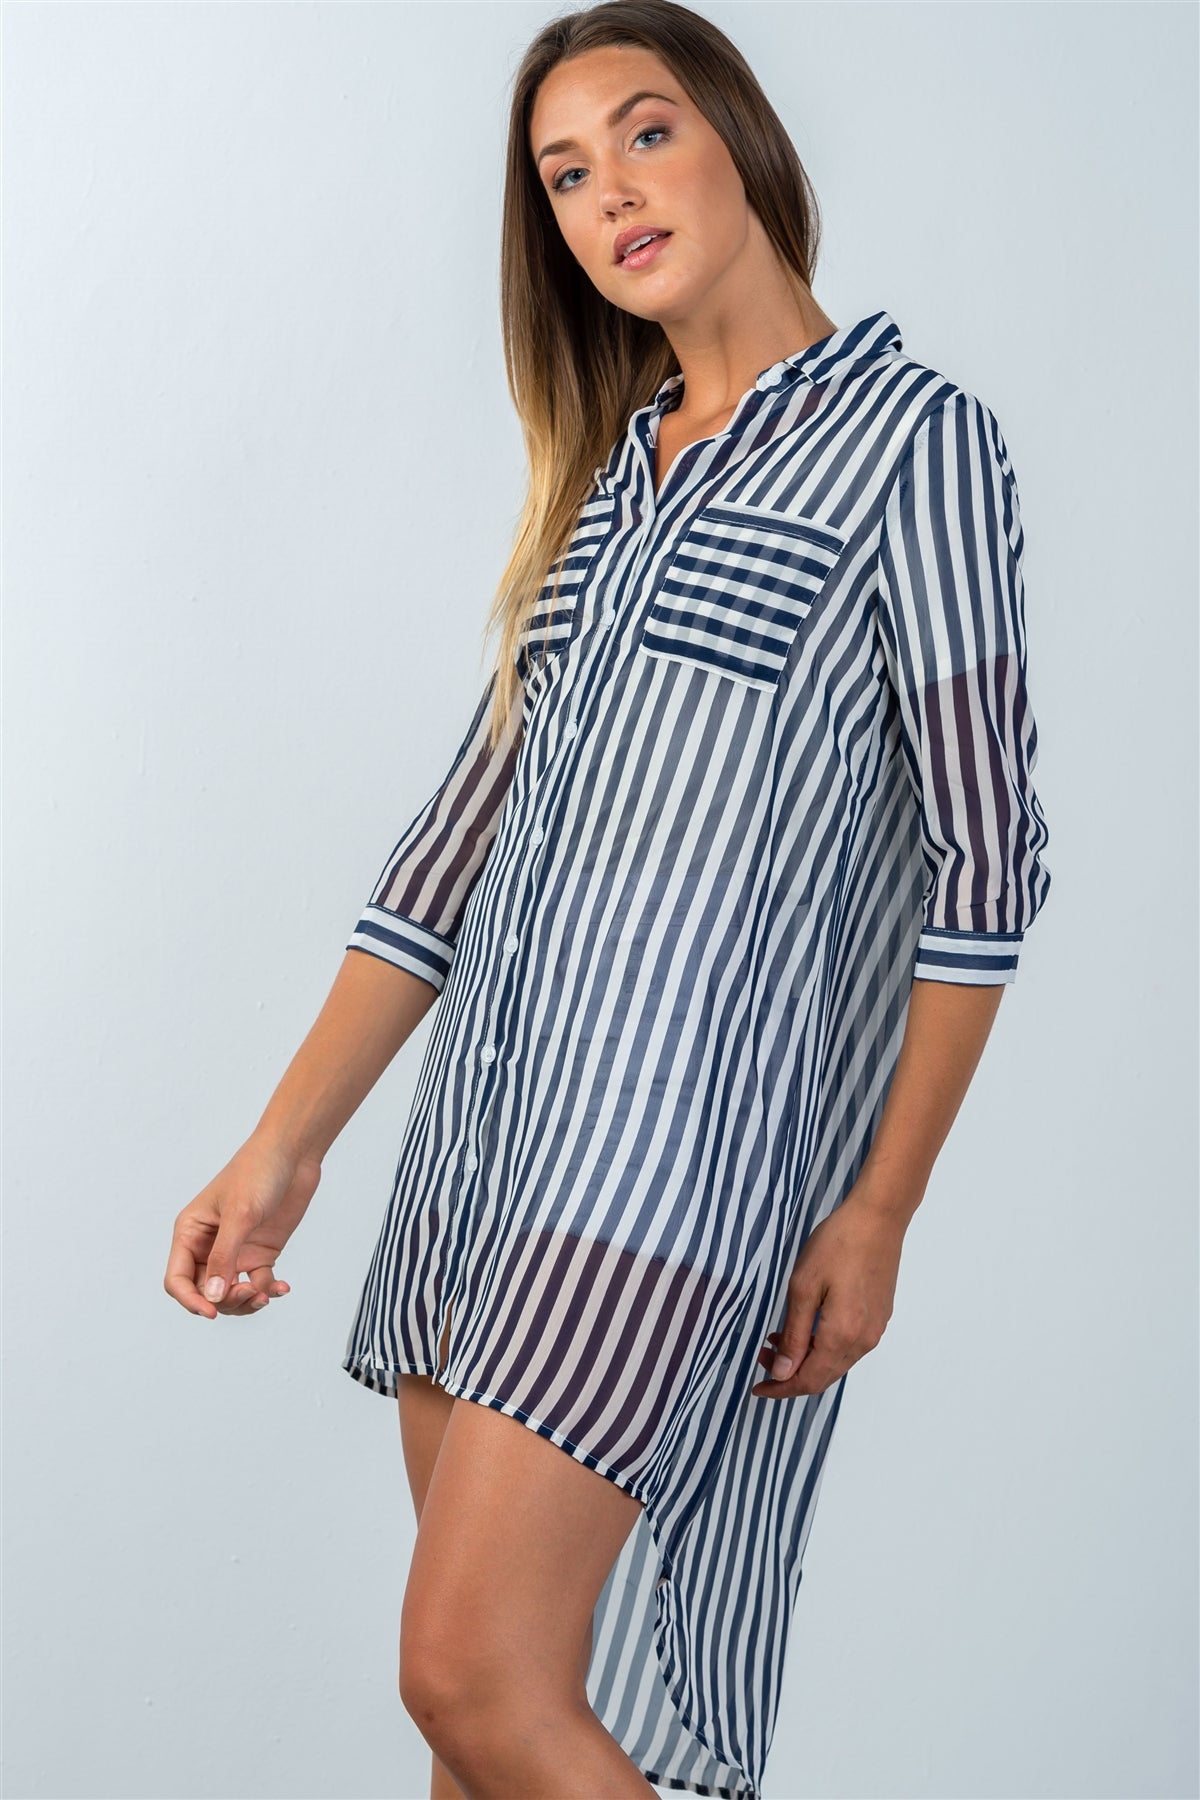 Ladies fashion 3/4 sleeve  semi sheer striped hi-low blouse